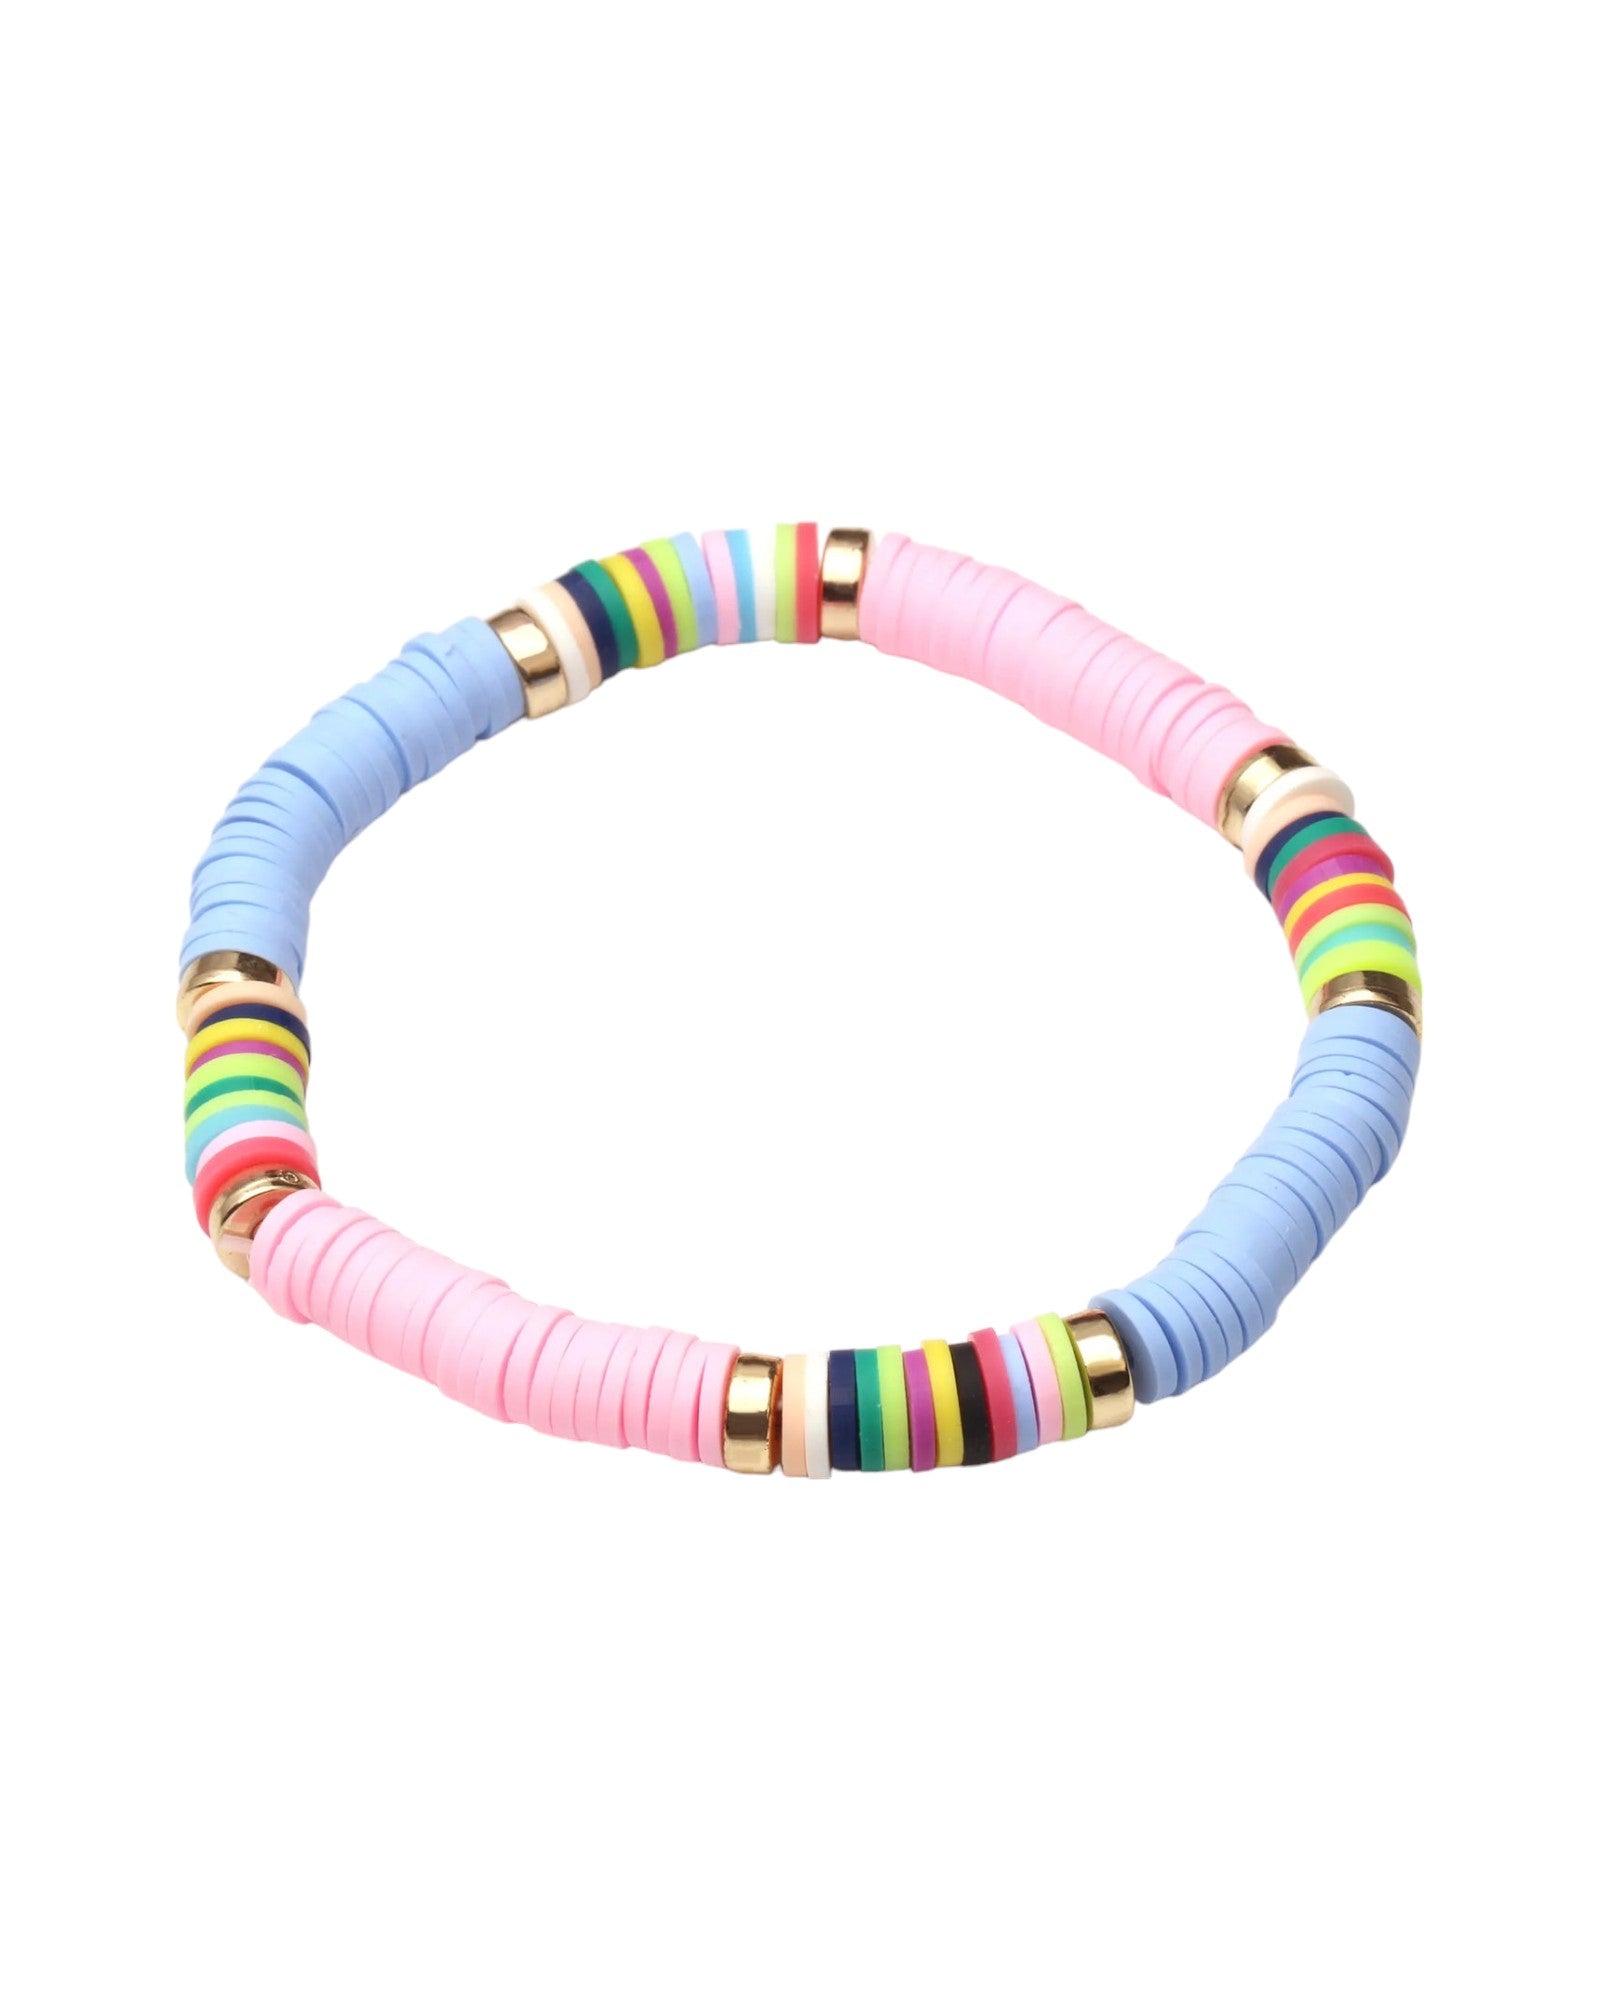 blue pink Boho Style Heishi Beads Bracelet festival accessories